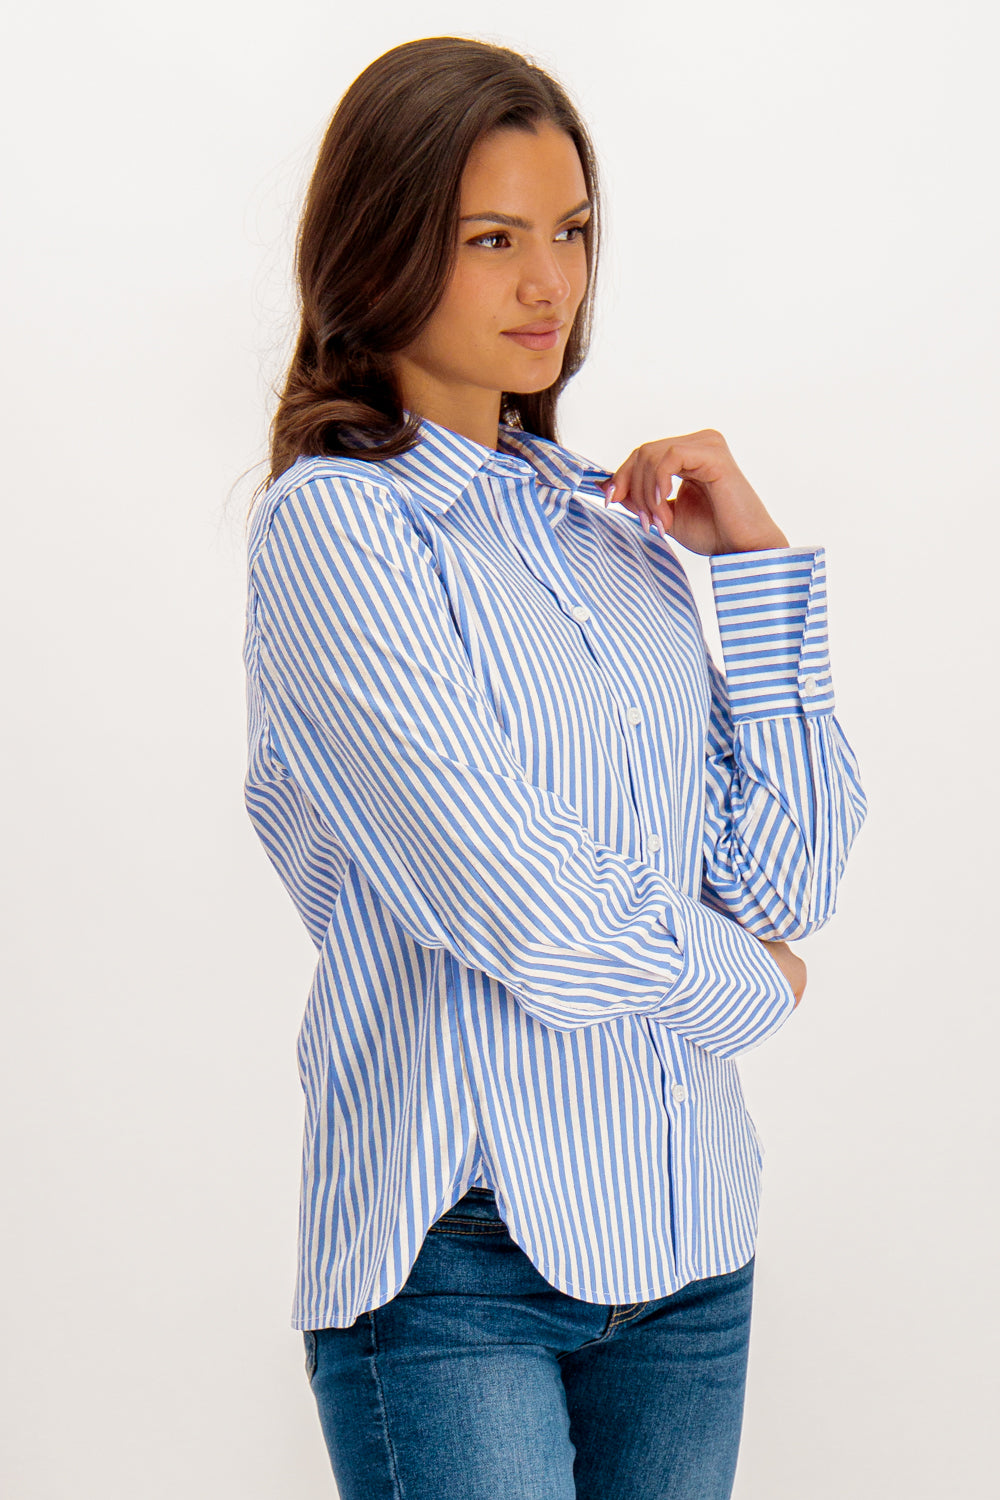 Clarisa Blue & White Striped Shirt